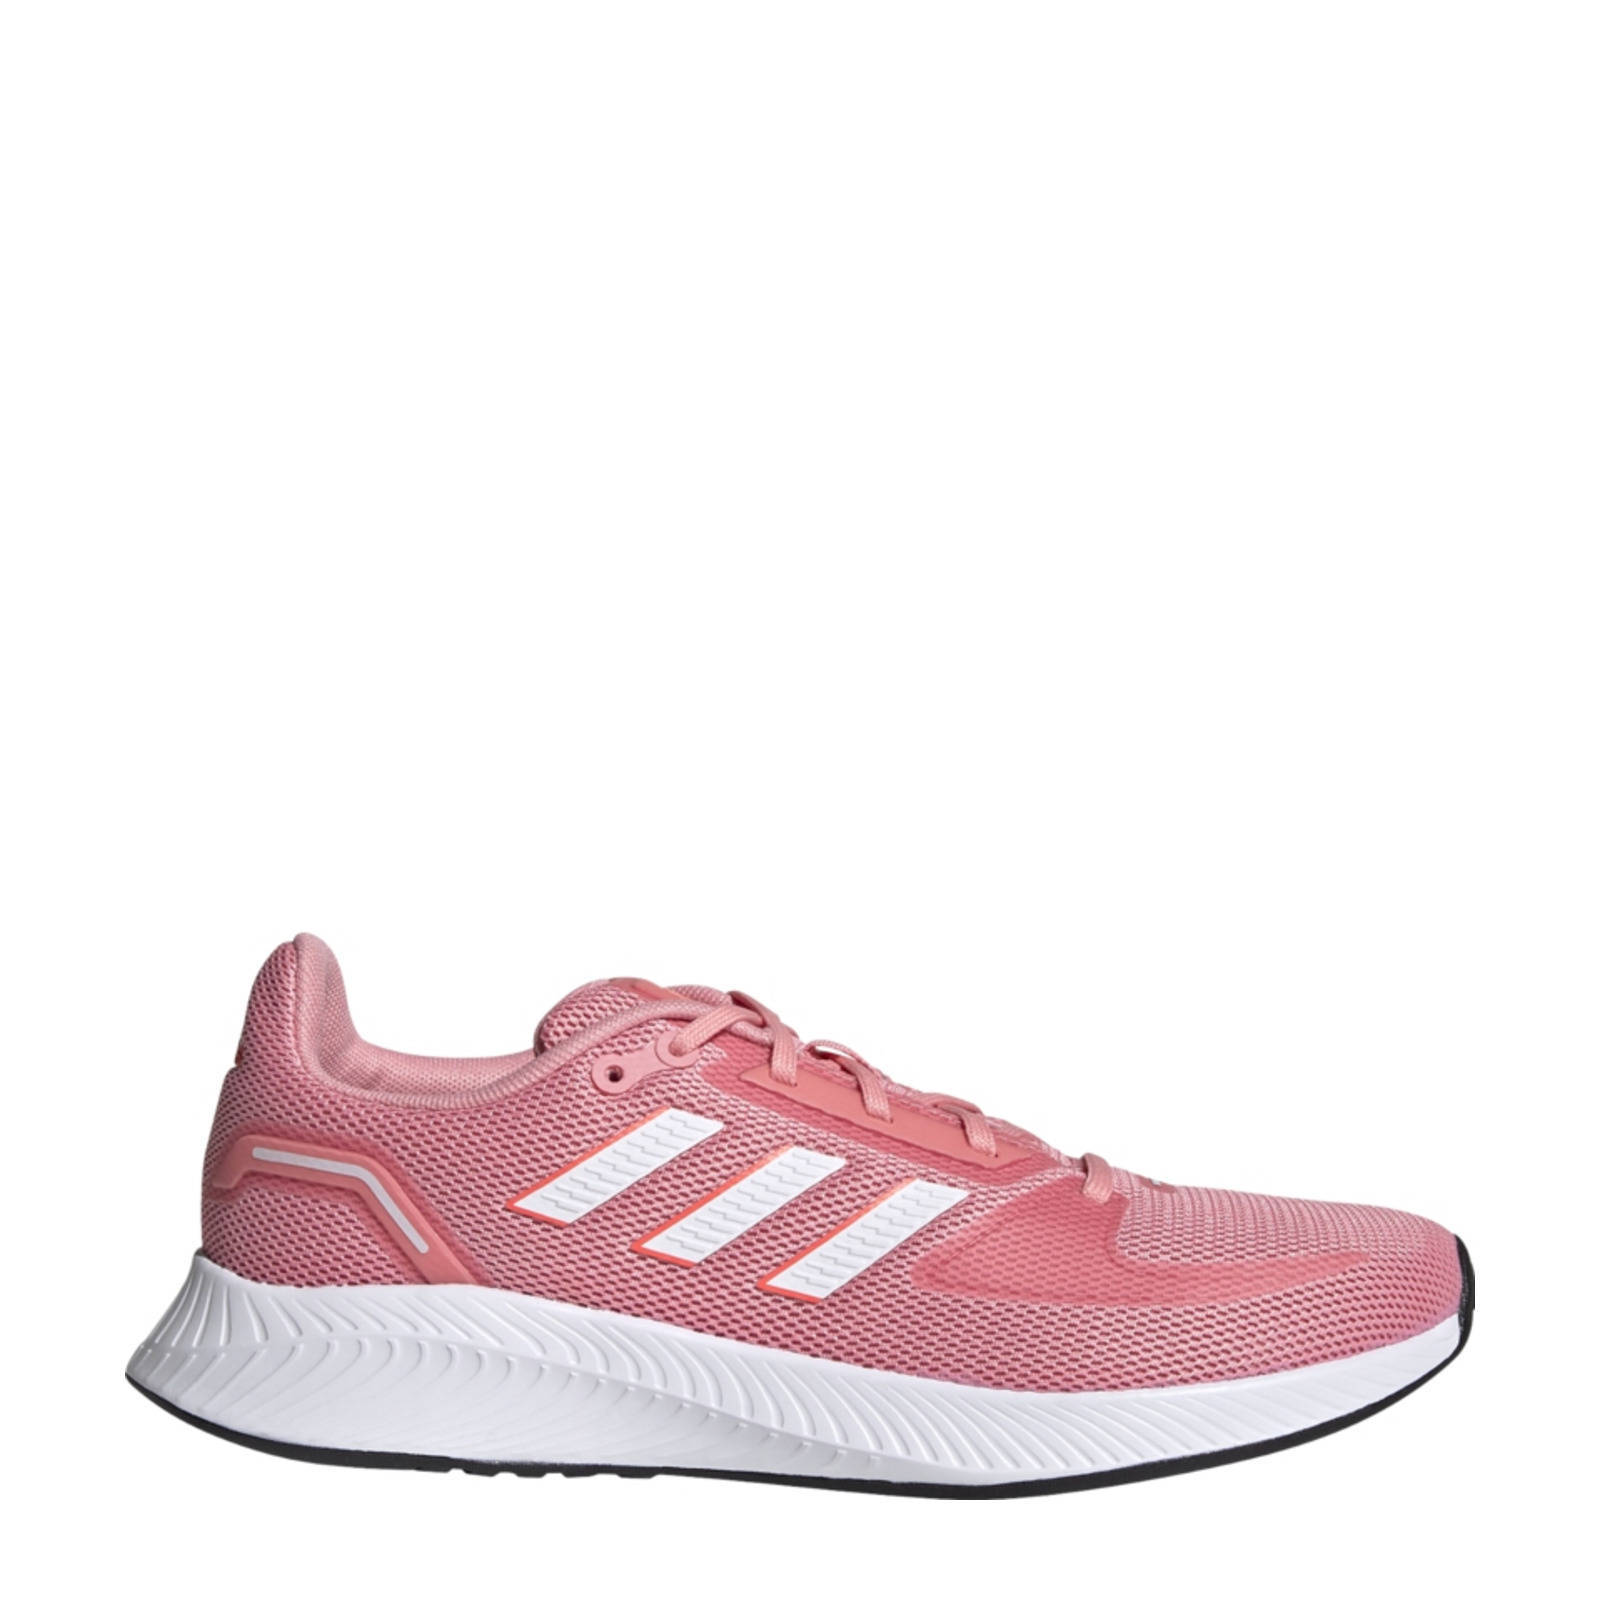 Adidas Performance Runfalcon 2.0 hardloopschoenen roze/wit/rood online kopen